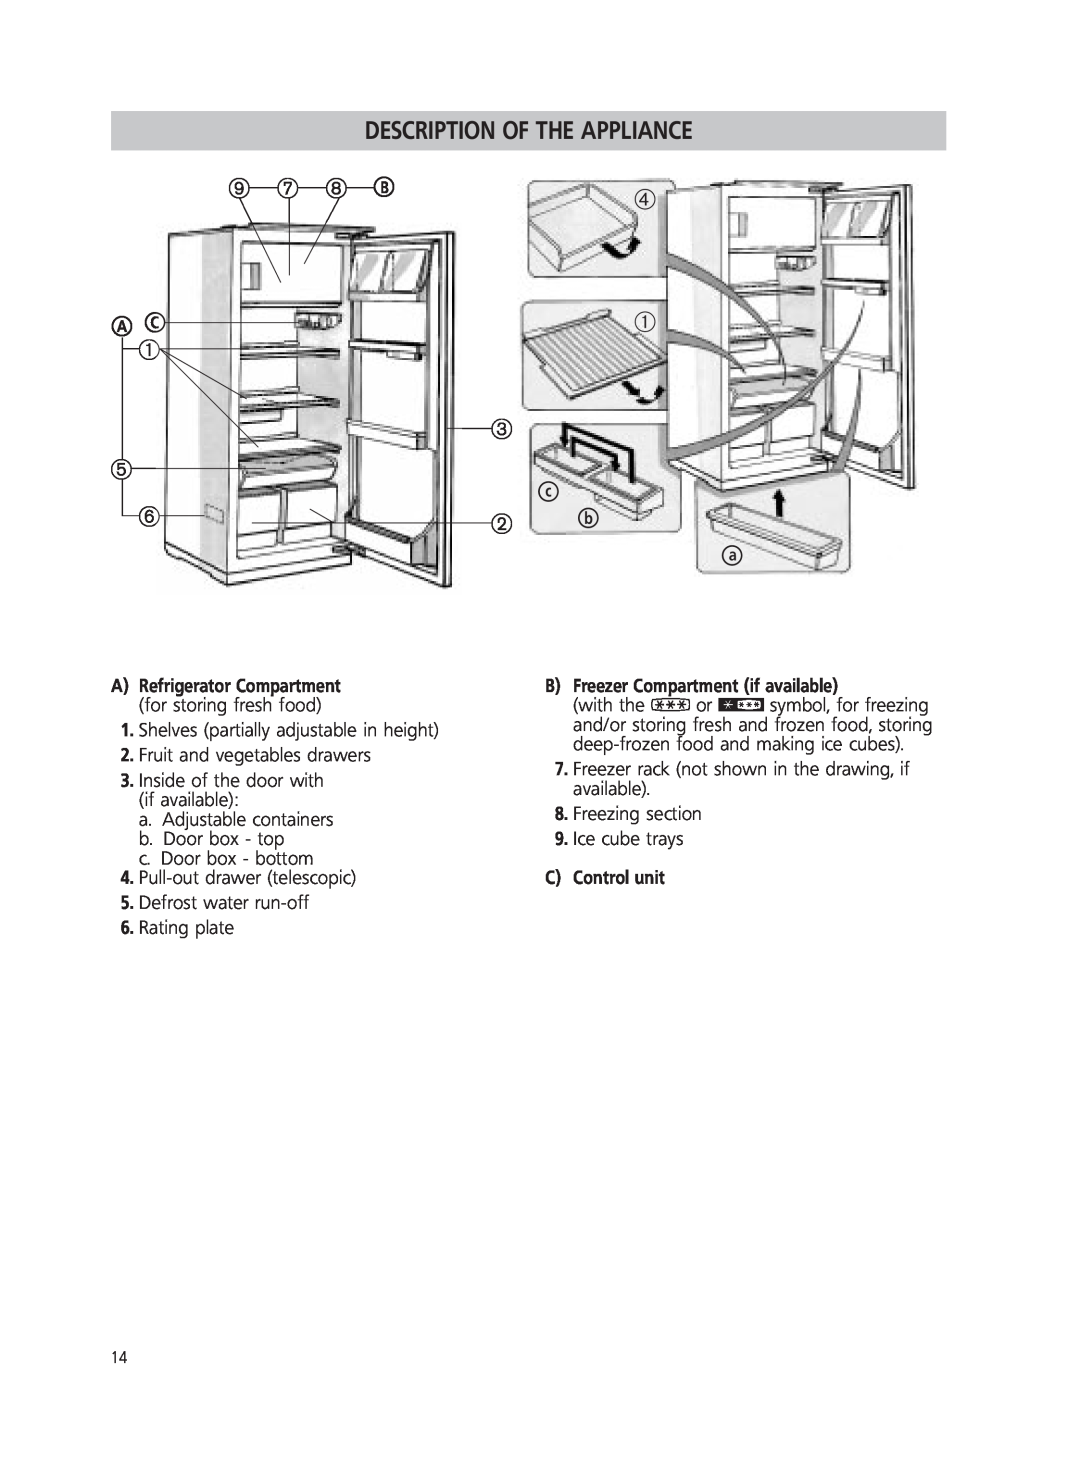 Smeg FR220A manual q e t Xc zw Xb Xa, BFreezer Compartment if available, CControl unit, Description Of The Appliance 